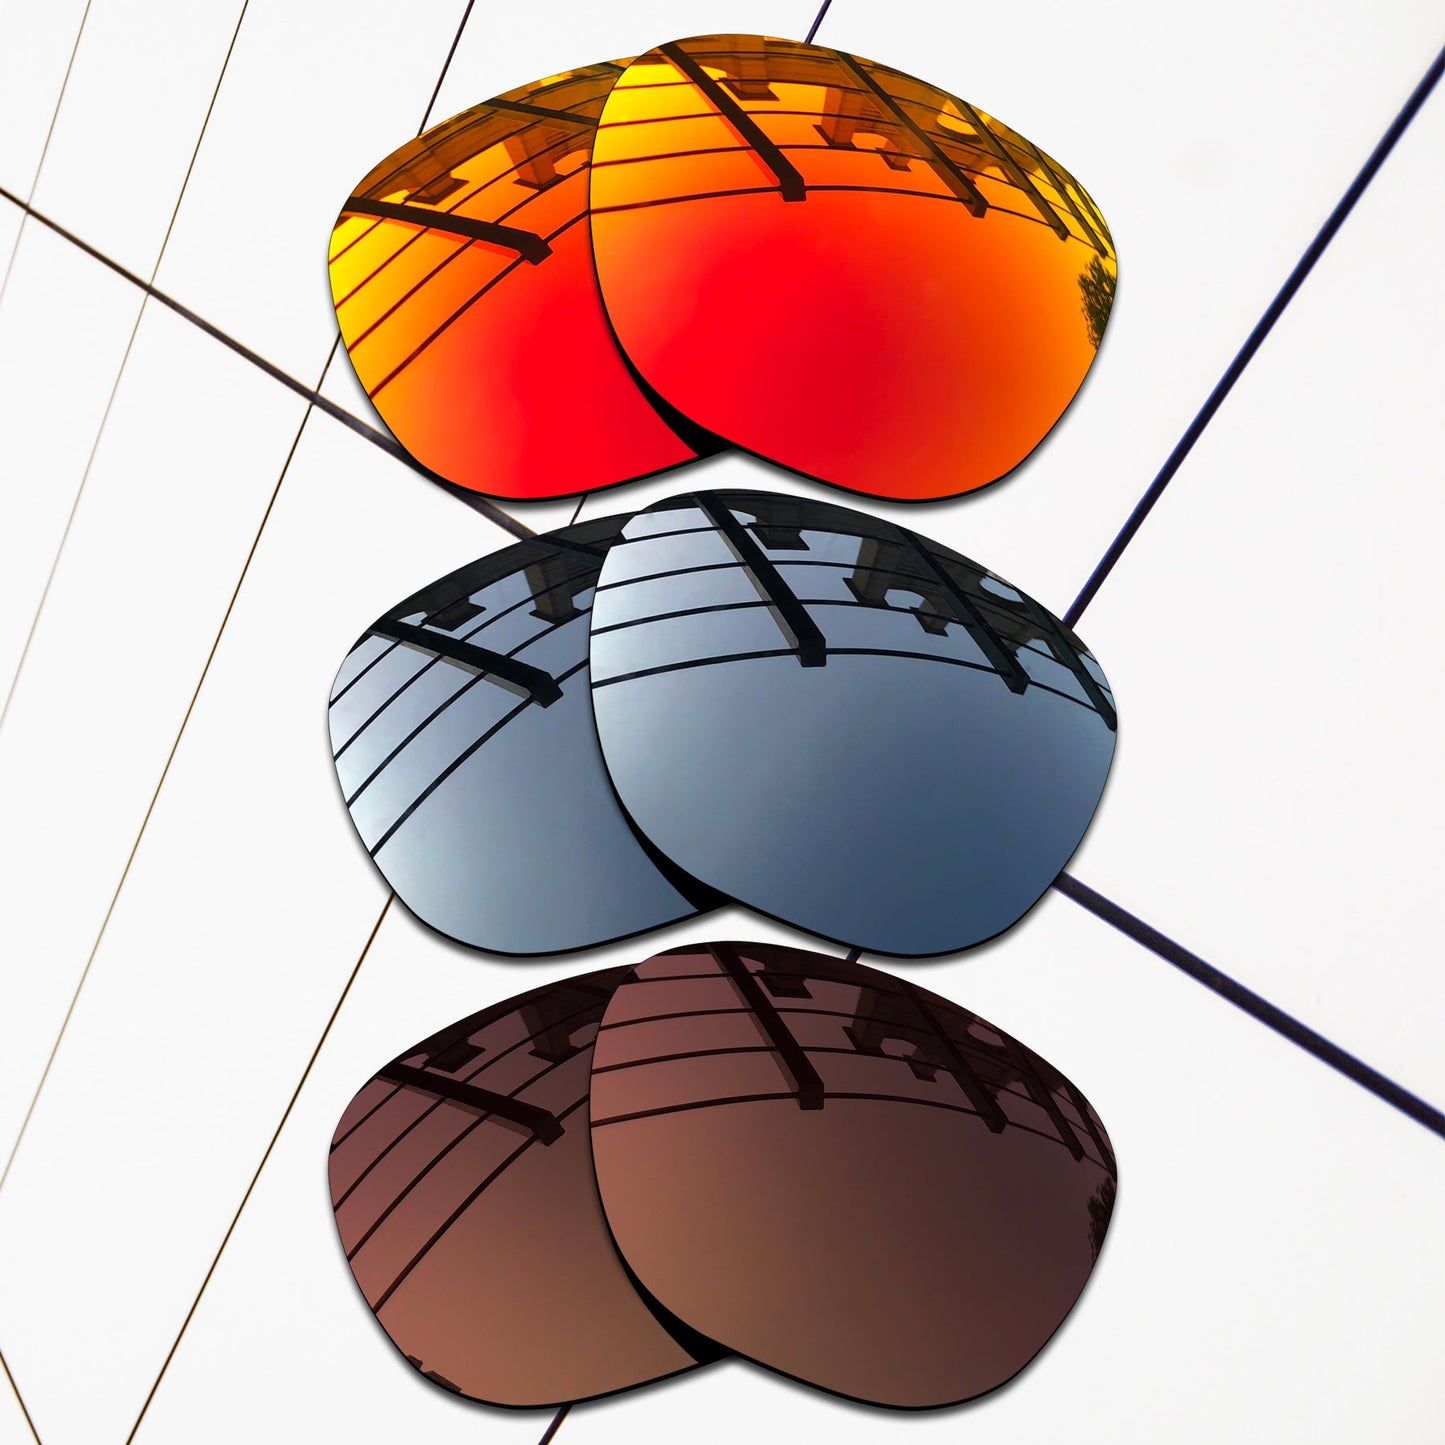 Polarized Replacement Lenses for Oakley Leadline Sunglasses